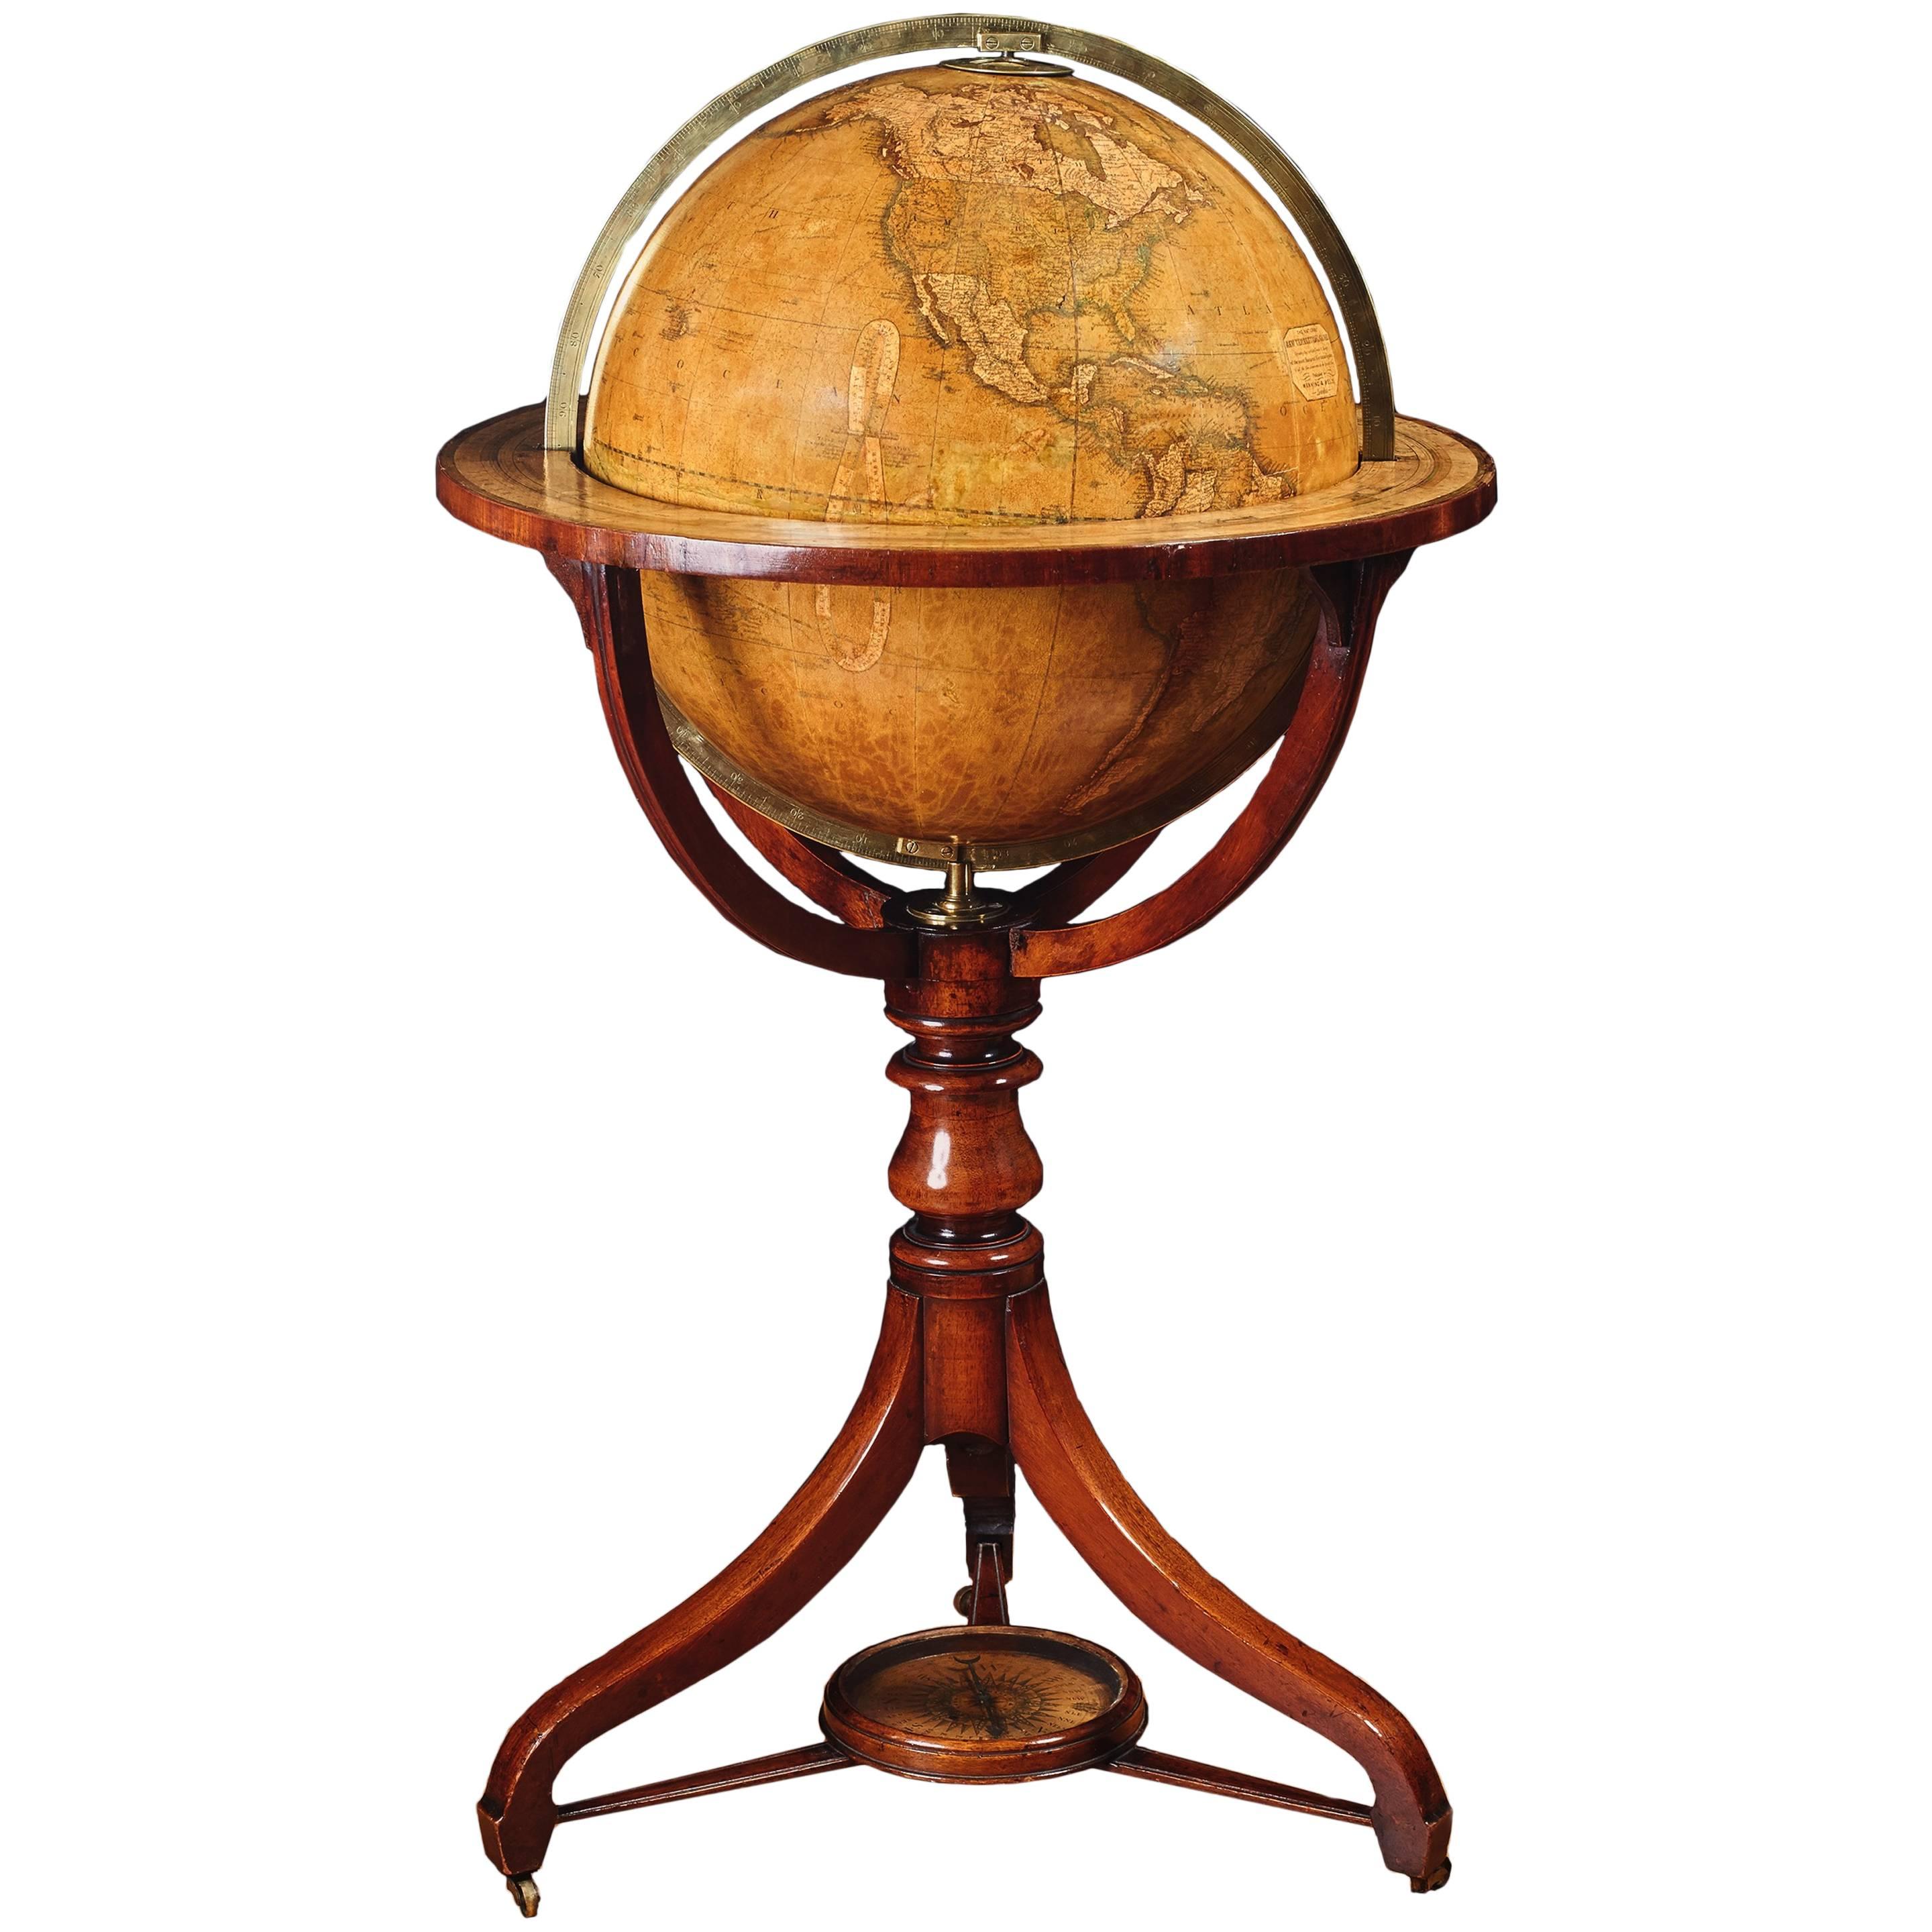 English Manning & Wells Terrestrial Floor Standing Globe, Dated 1854